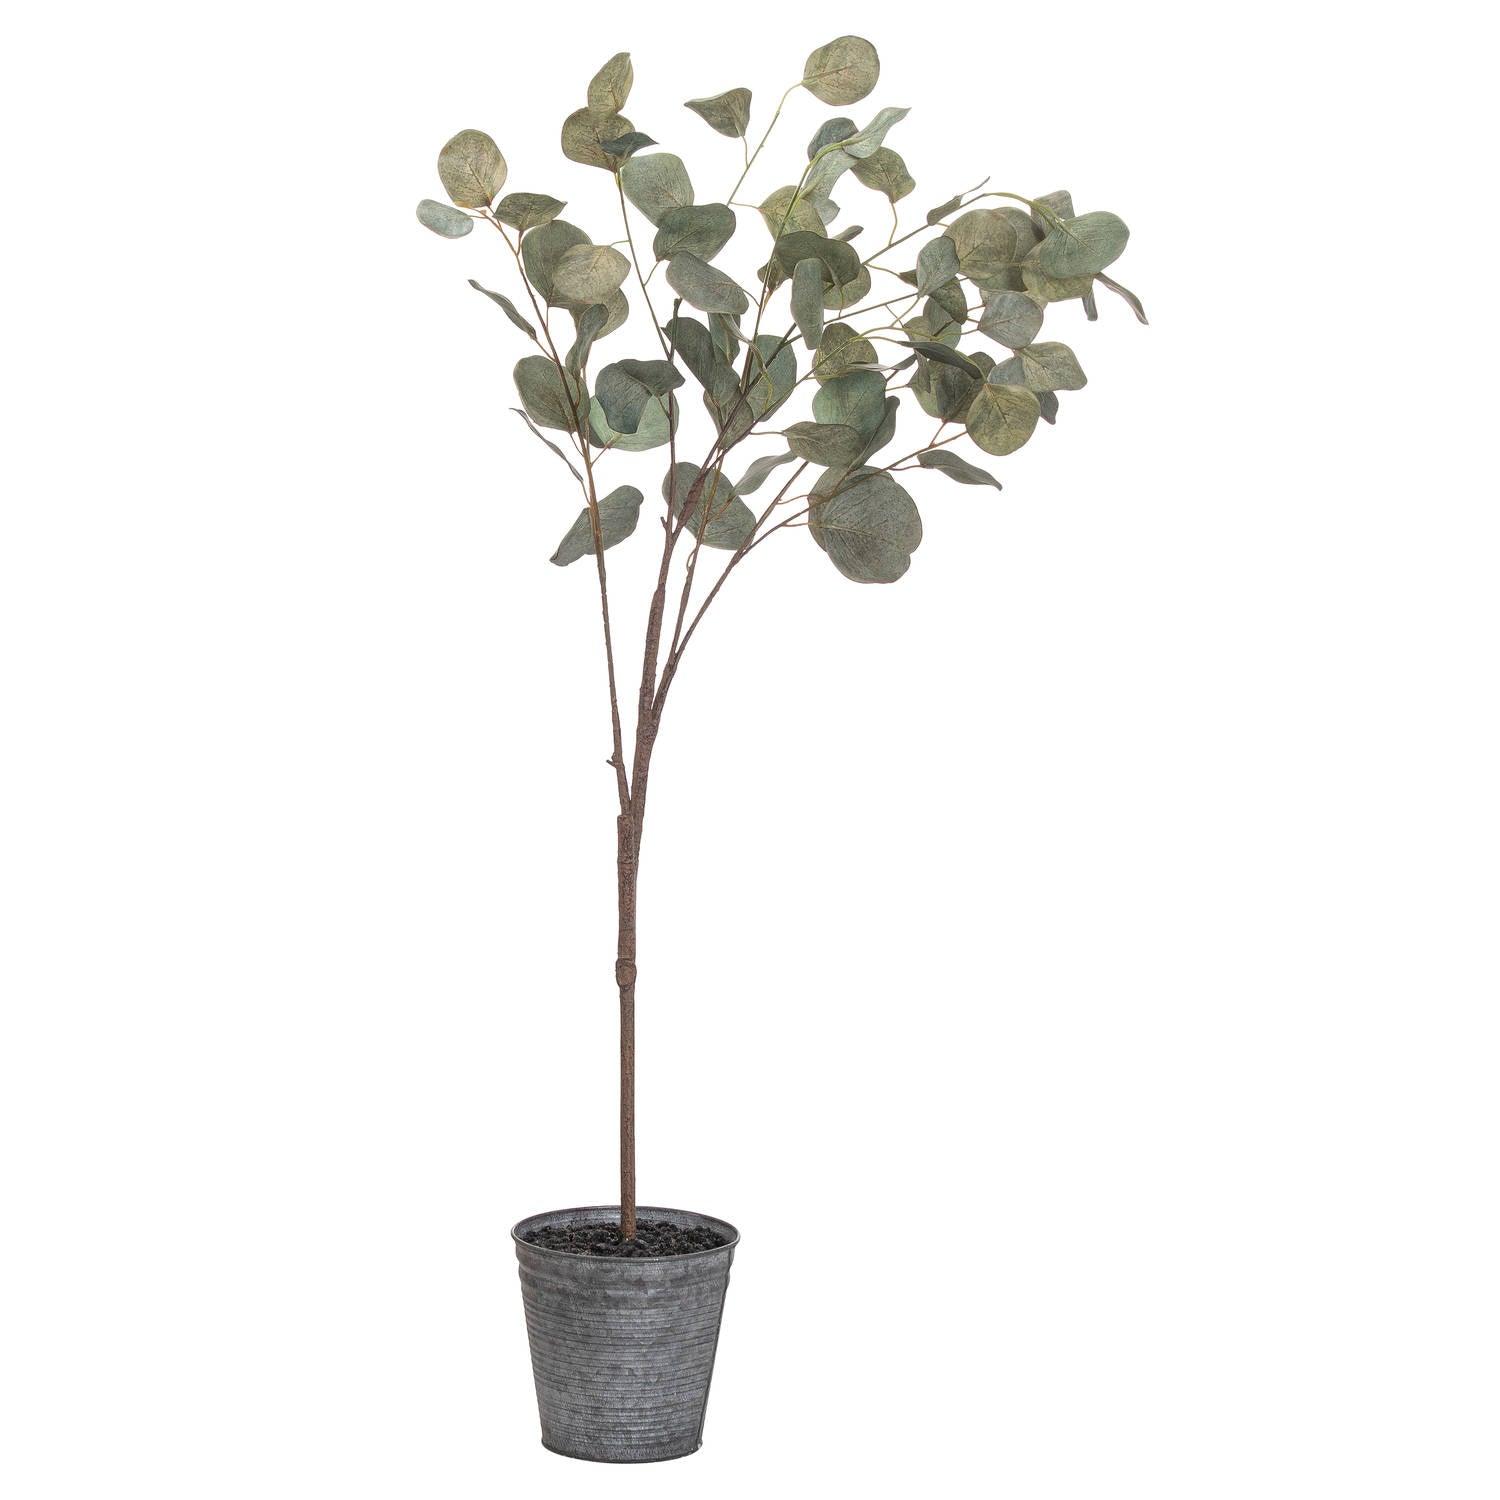 View Eucalyptus Tree In Metallic Pot information